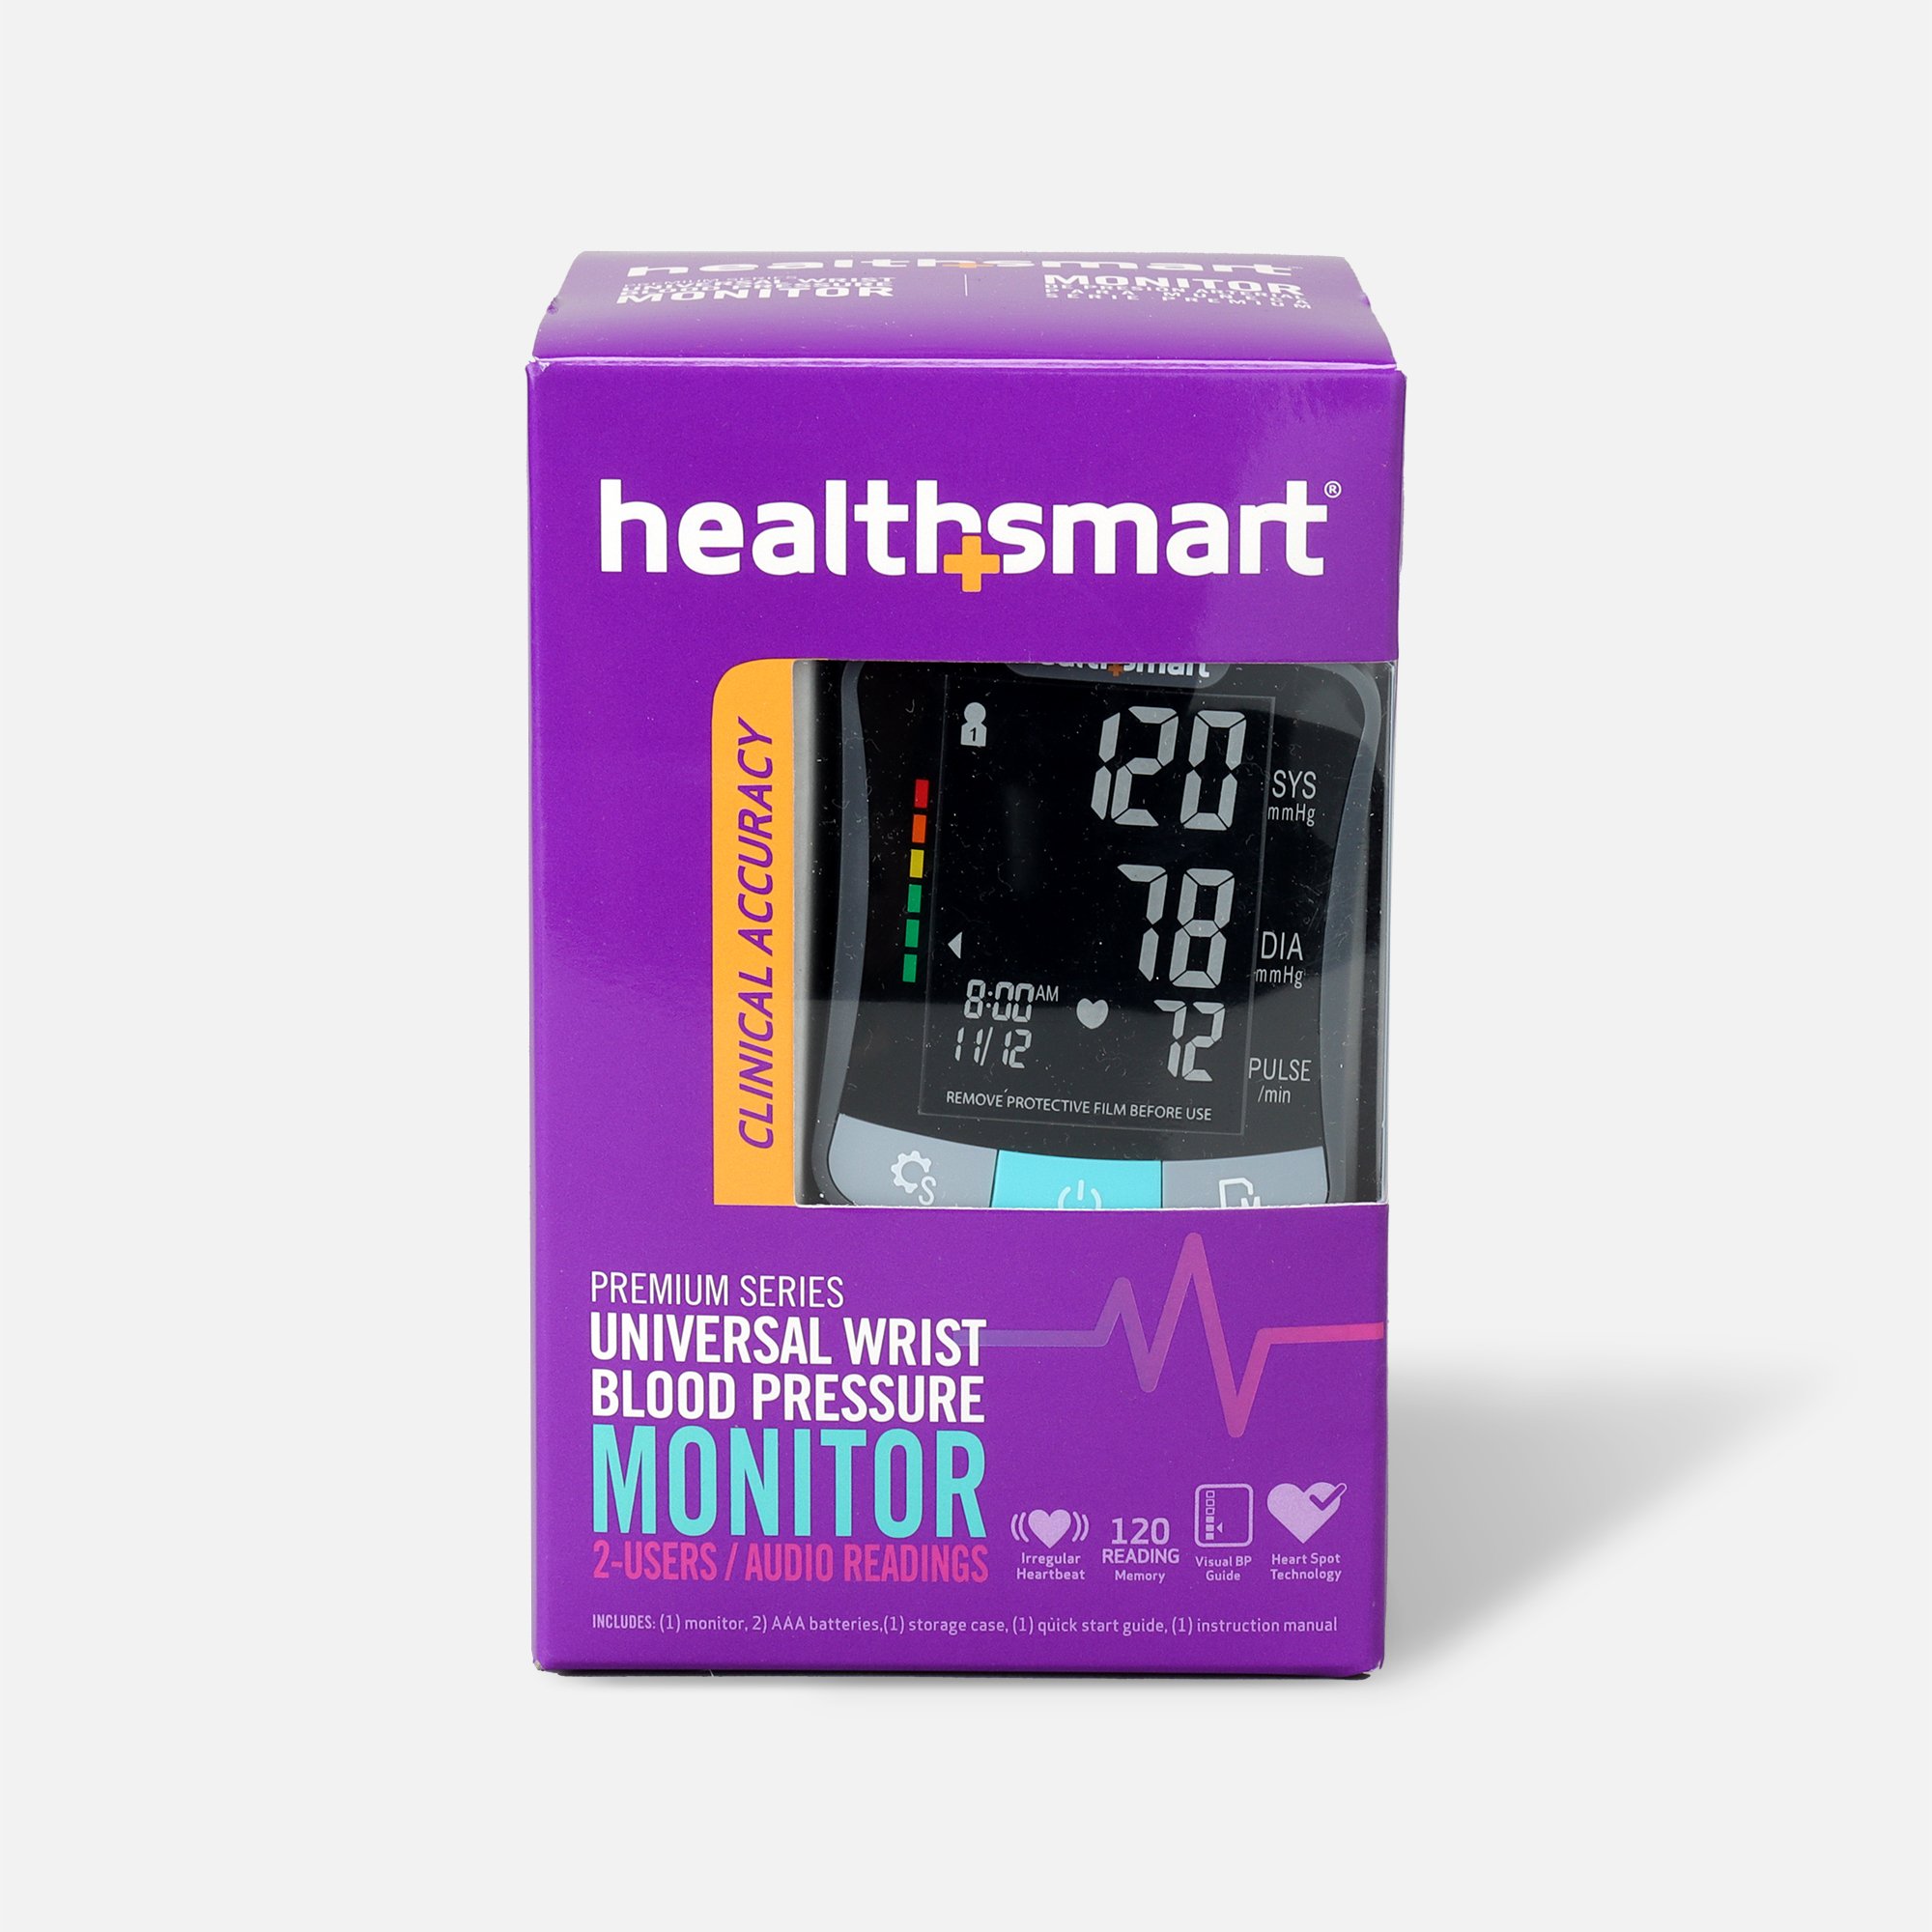 https://fsastore.com/on/demandware.static/-/Sites-hec-master/default/dwadc0b485/images/large/healthsmart-premium-wrist-digital-blood-pressure-monitor-25430-1.jpg